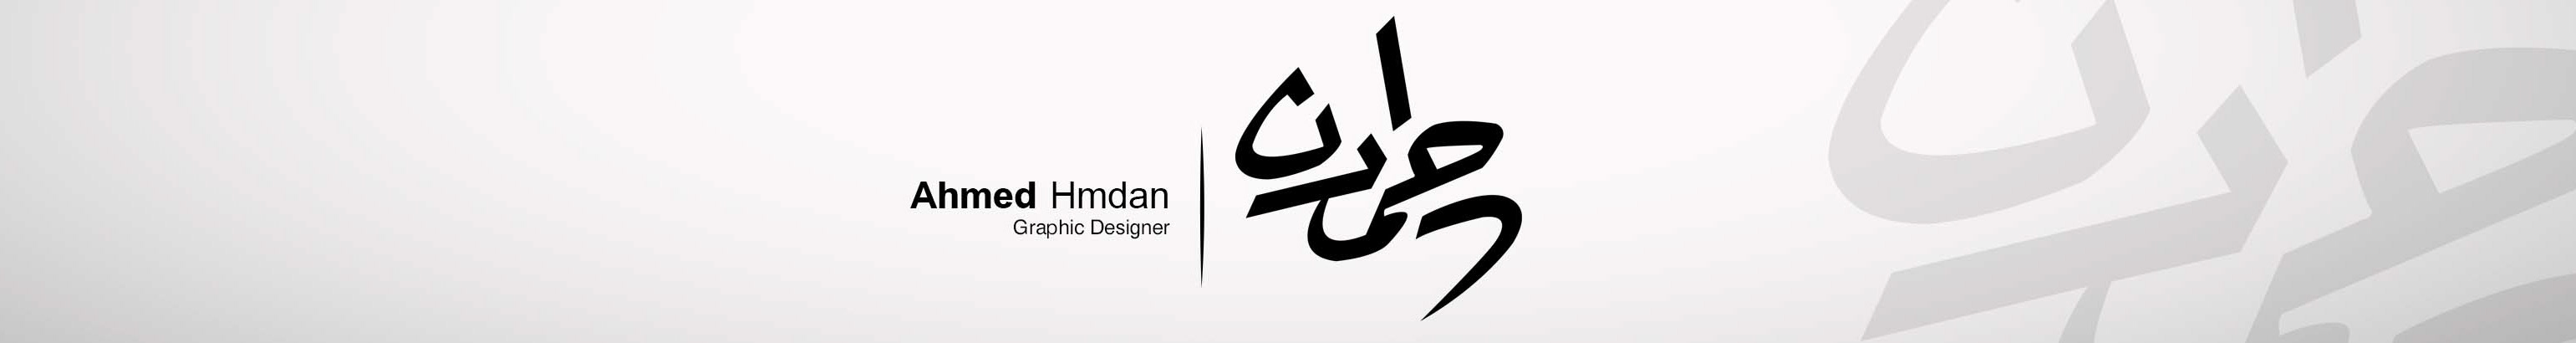 Ahmed Hmdan ✪'s profile banner